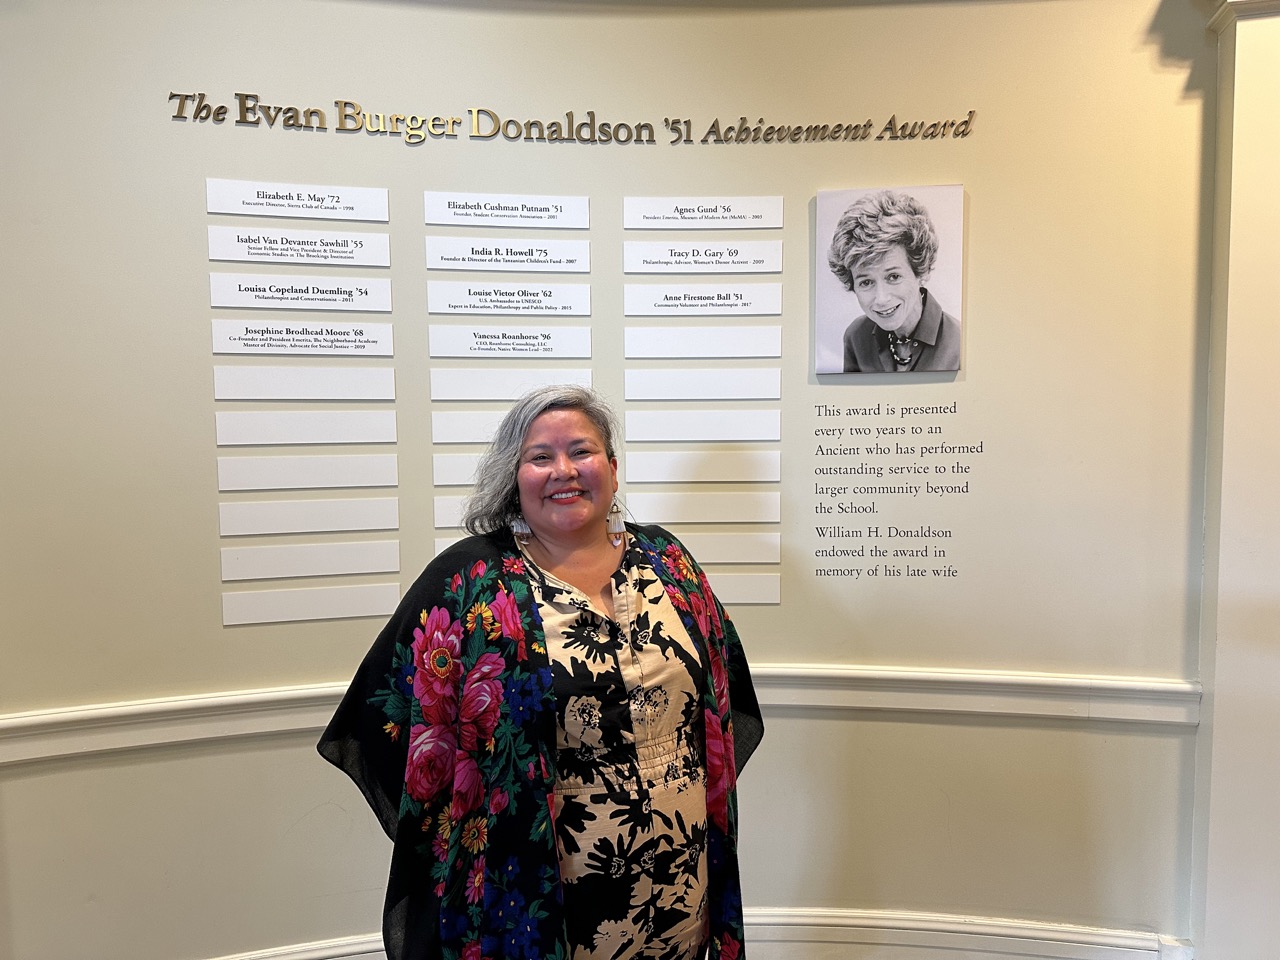 Vanessa Roanhorse '96 was awarded the Evan Burger Donaldson ’51 Achievement Award in 2022